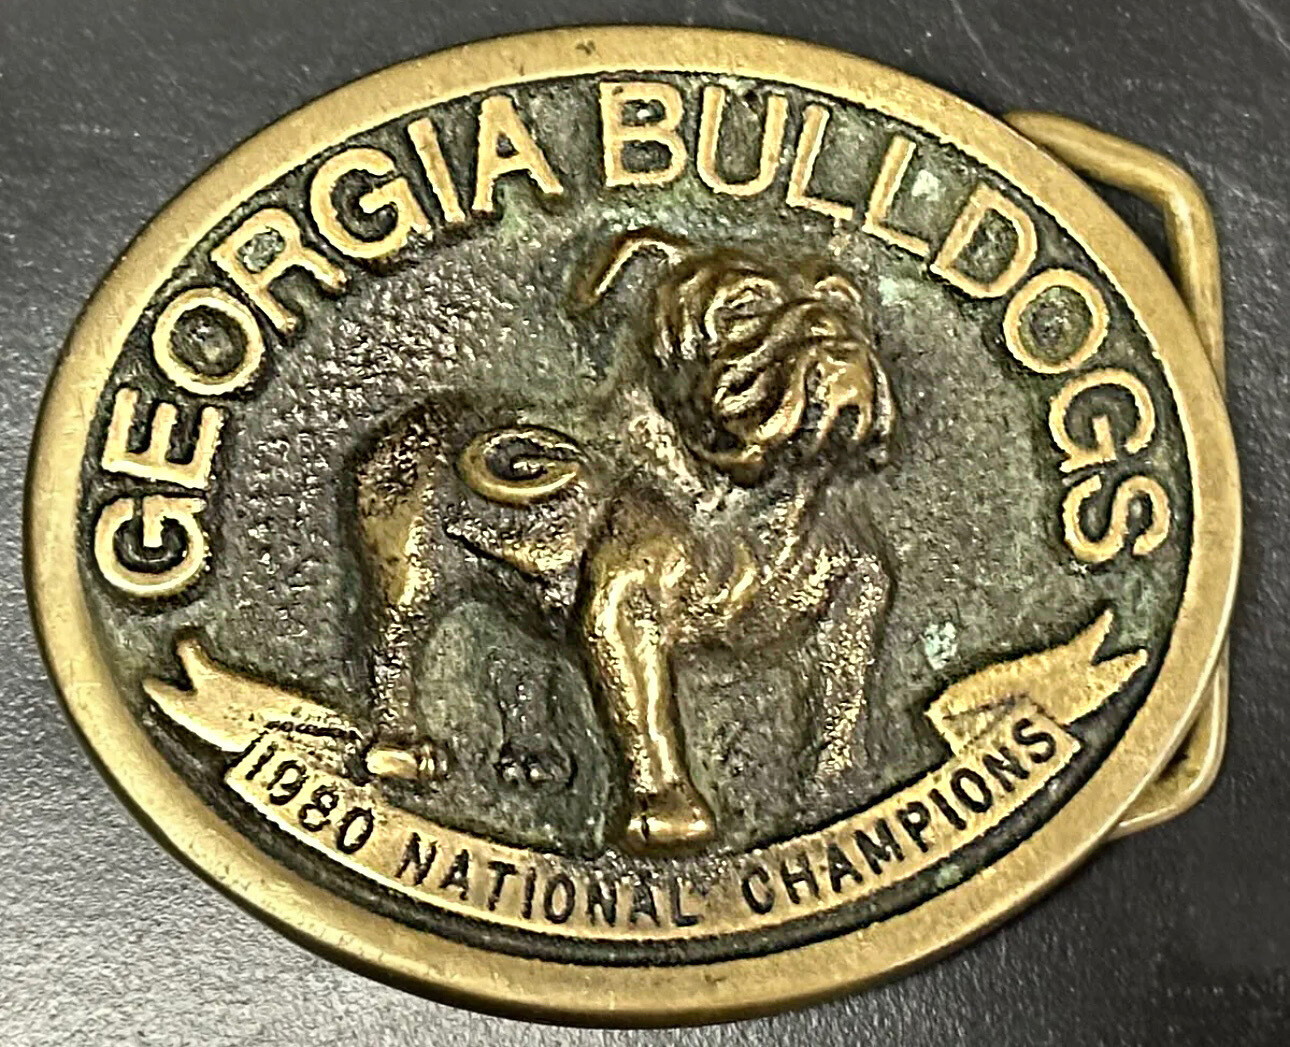 Georgia Bulldogs 1980 National Champions Solid Brass Belt buckle Heritage